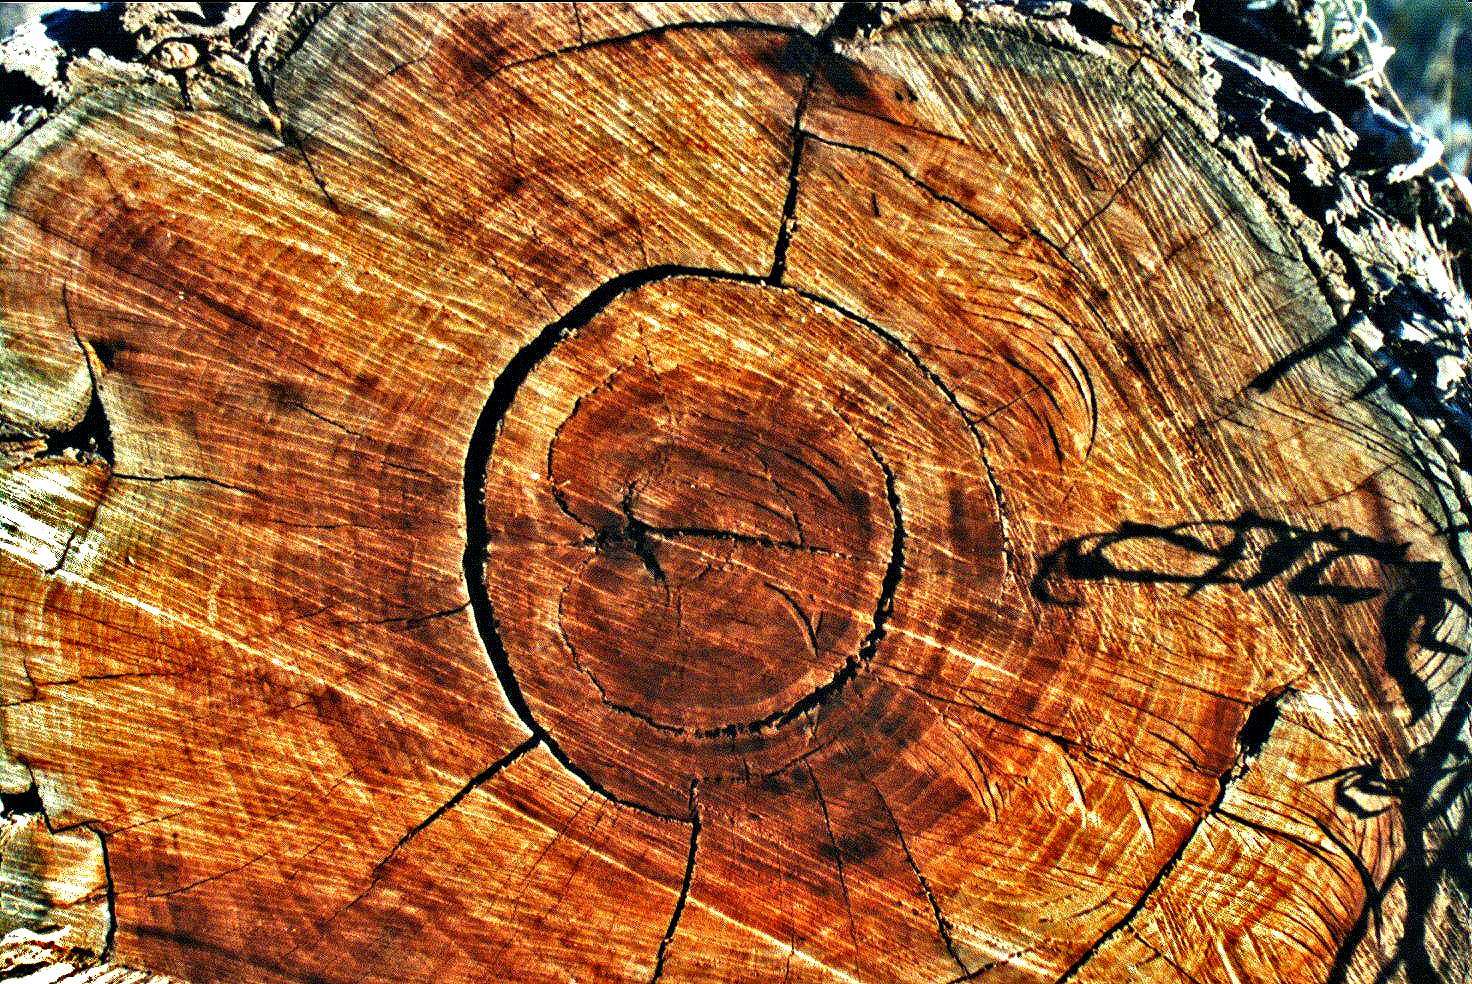 crosscut.tif : Nature Stuff : American artist digital invention archival artifact color print image emerging capture creative convergent transparency universe dream history painter Hybrid exhibition